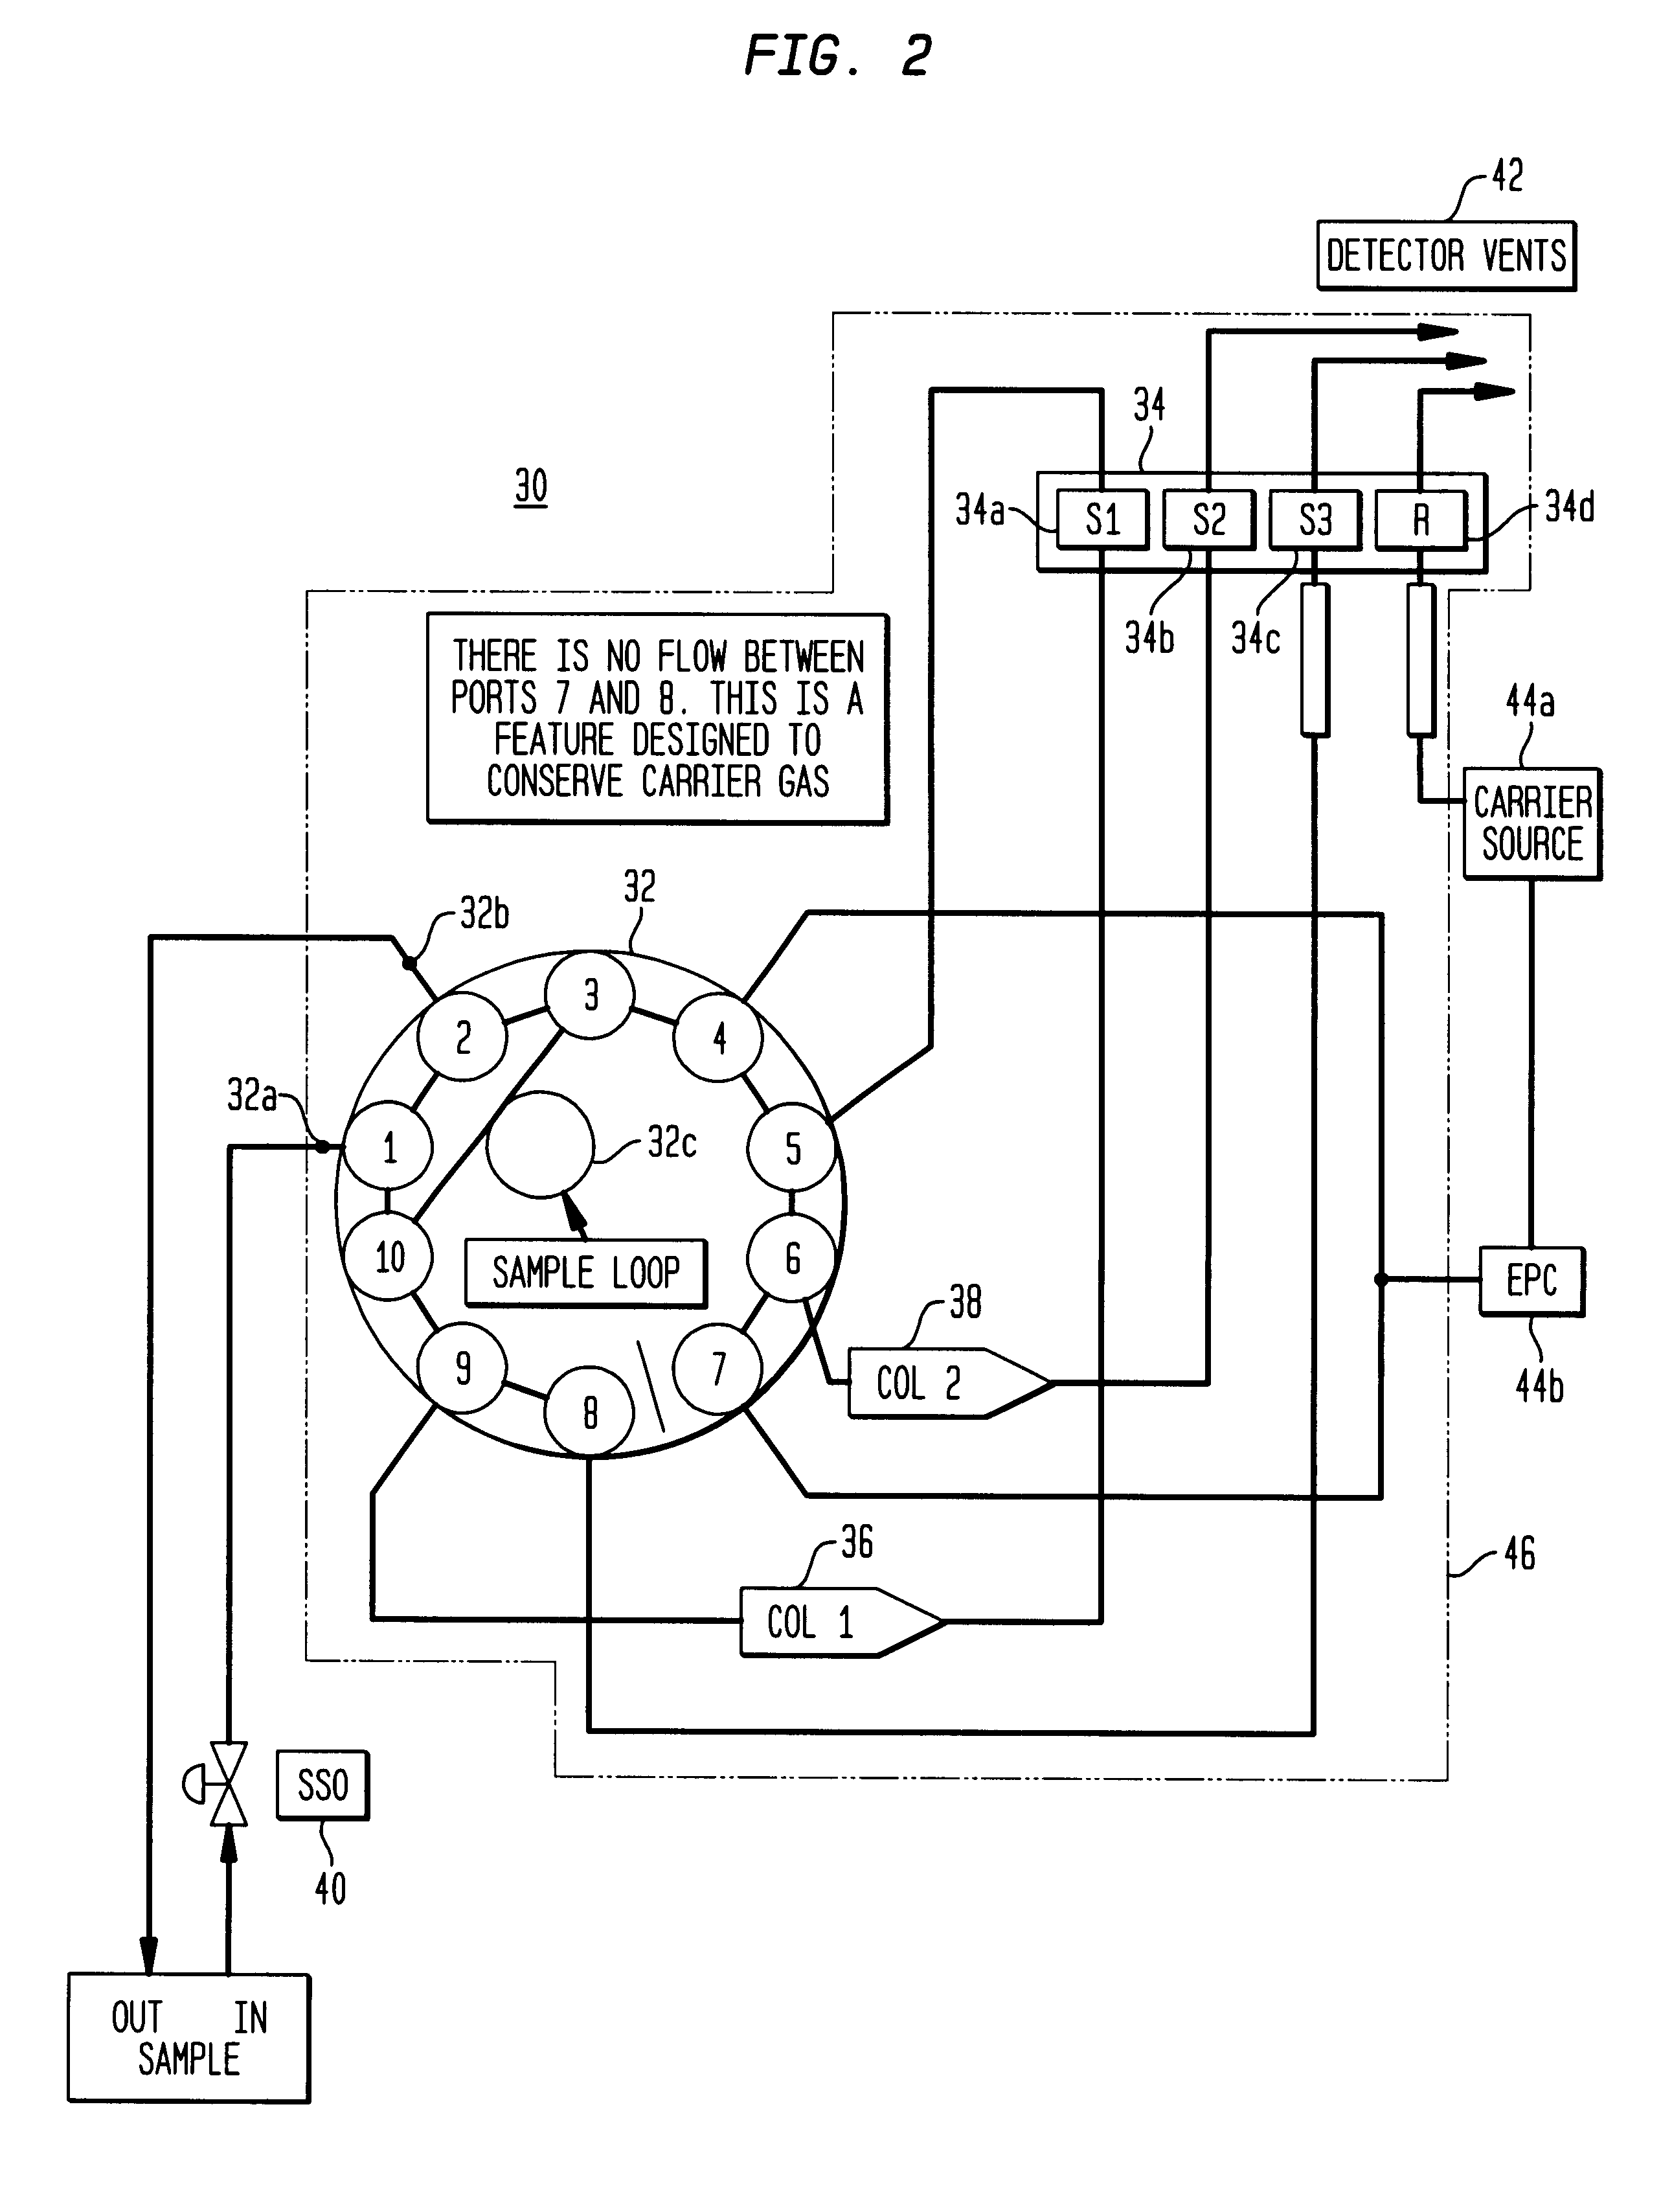 Gas chromatograph sample and column-switching valve